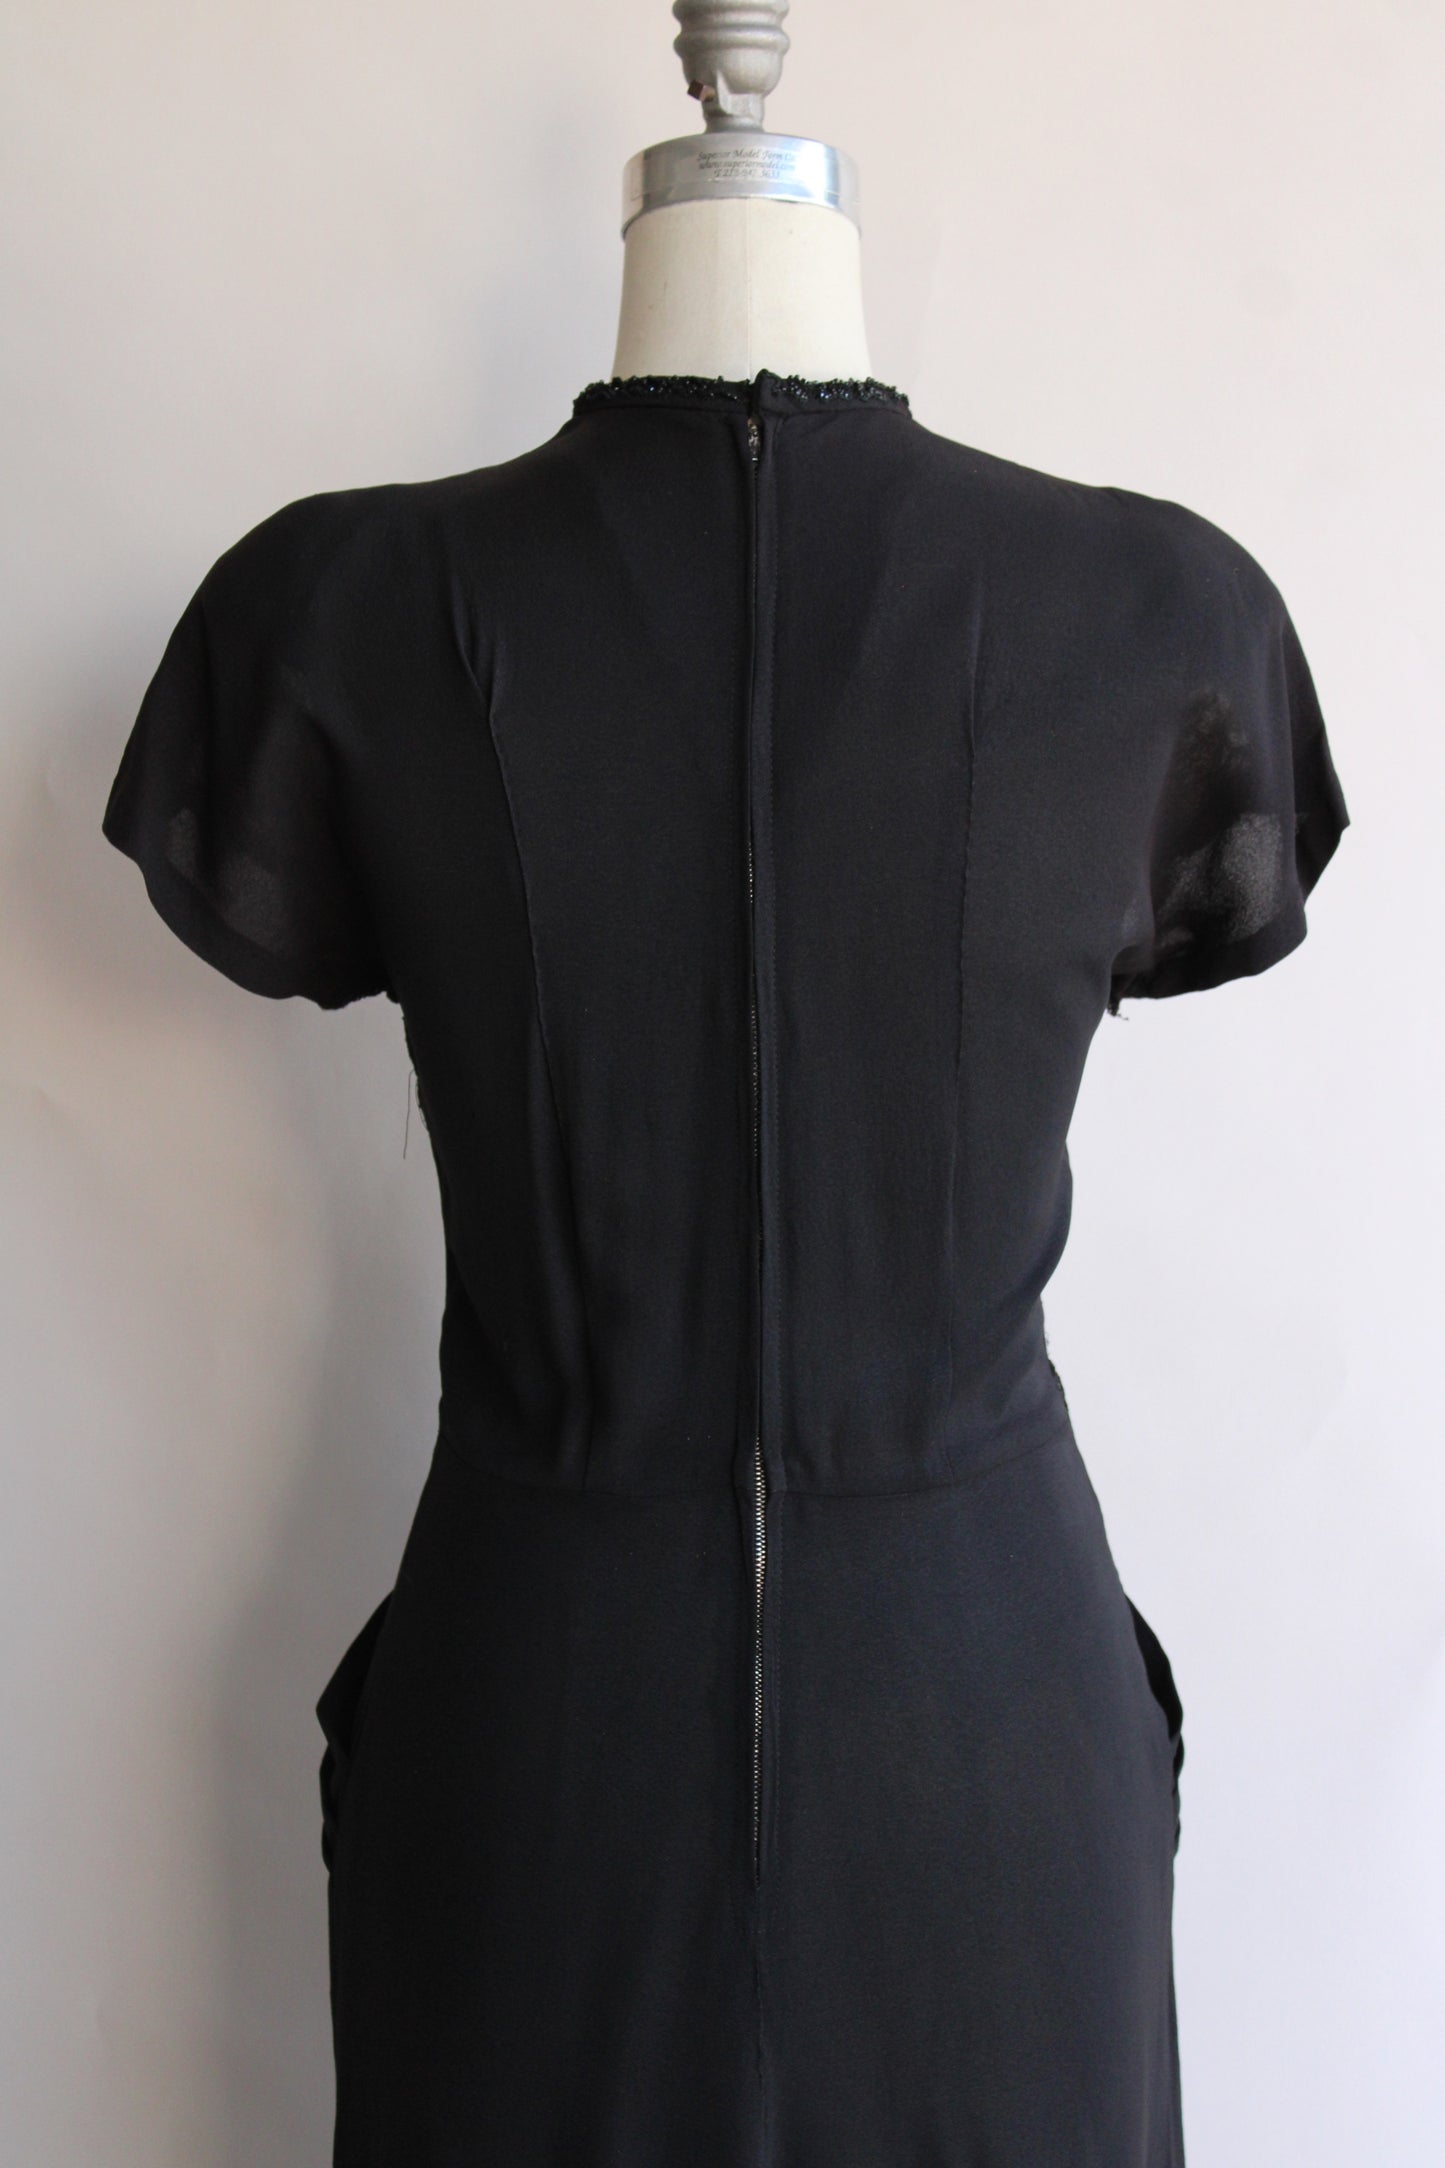 Vintage 1940s Black Dress With Illusion Lace Keyhole Neckline